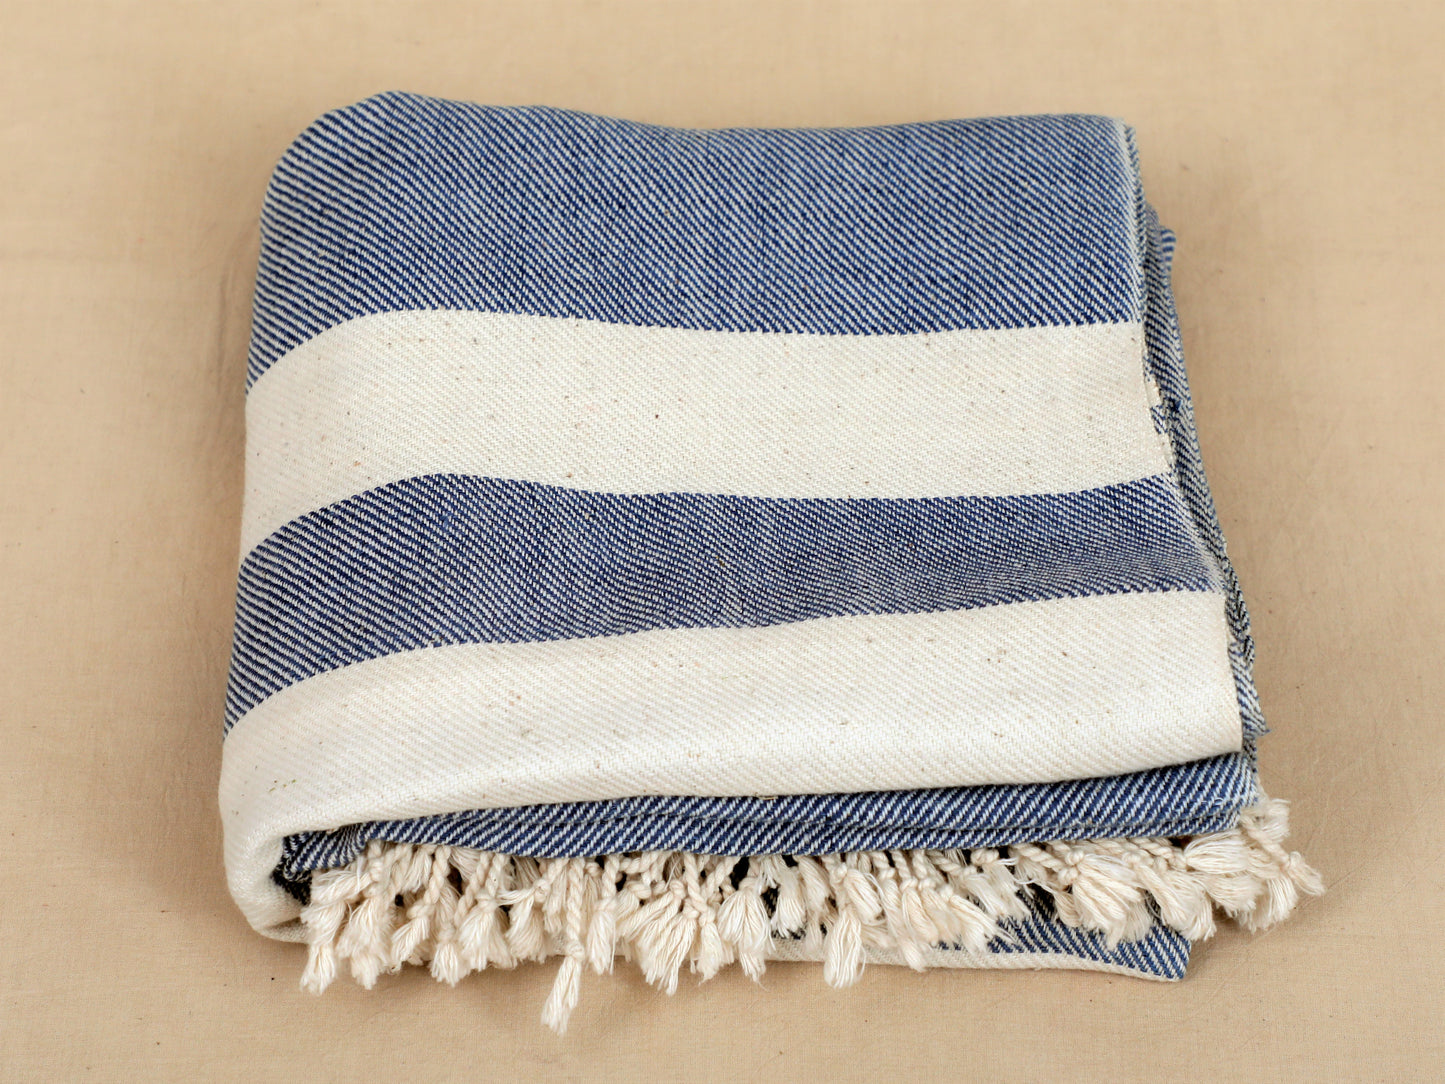 Hand spun handwoven organic cotton bath towel, Organic bath accessories